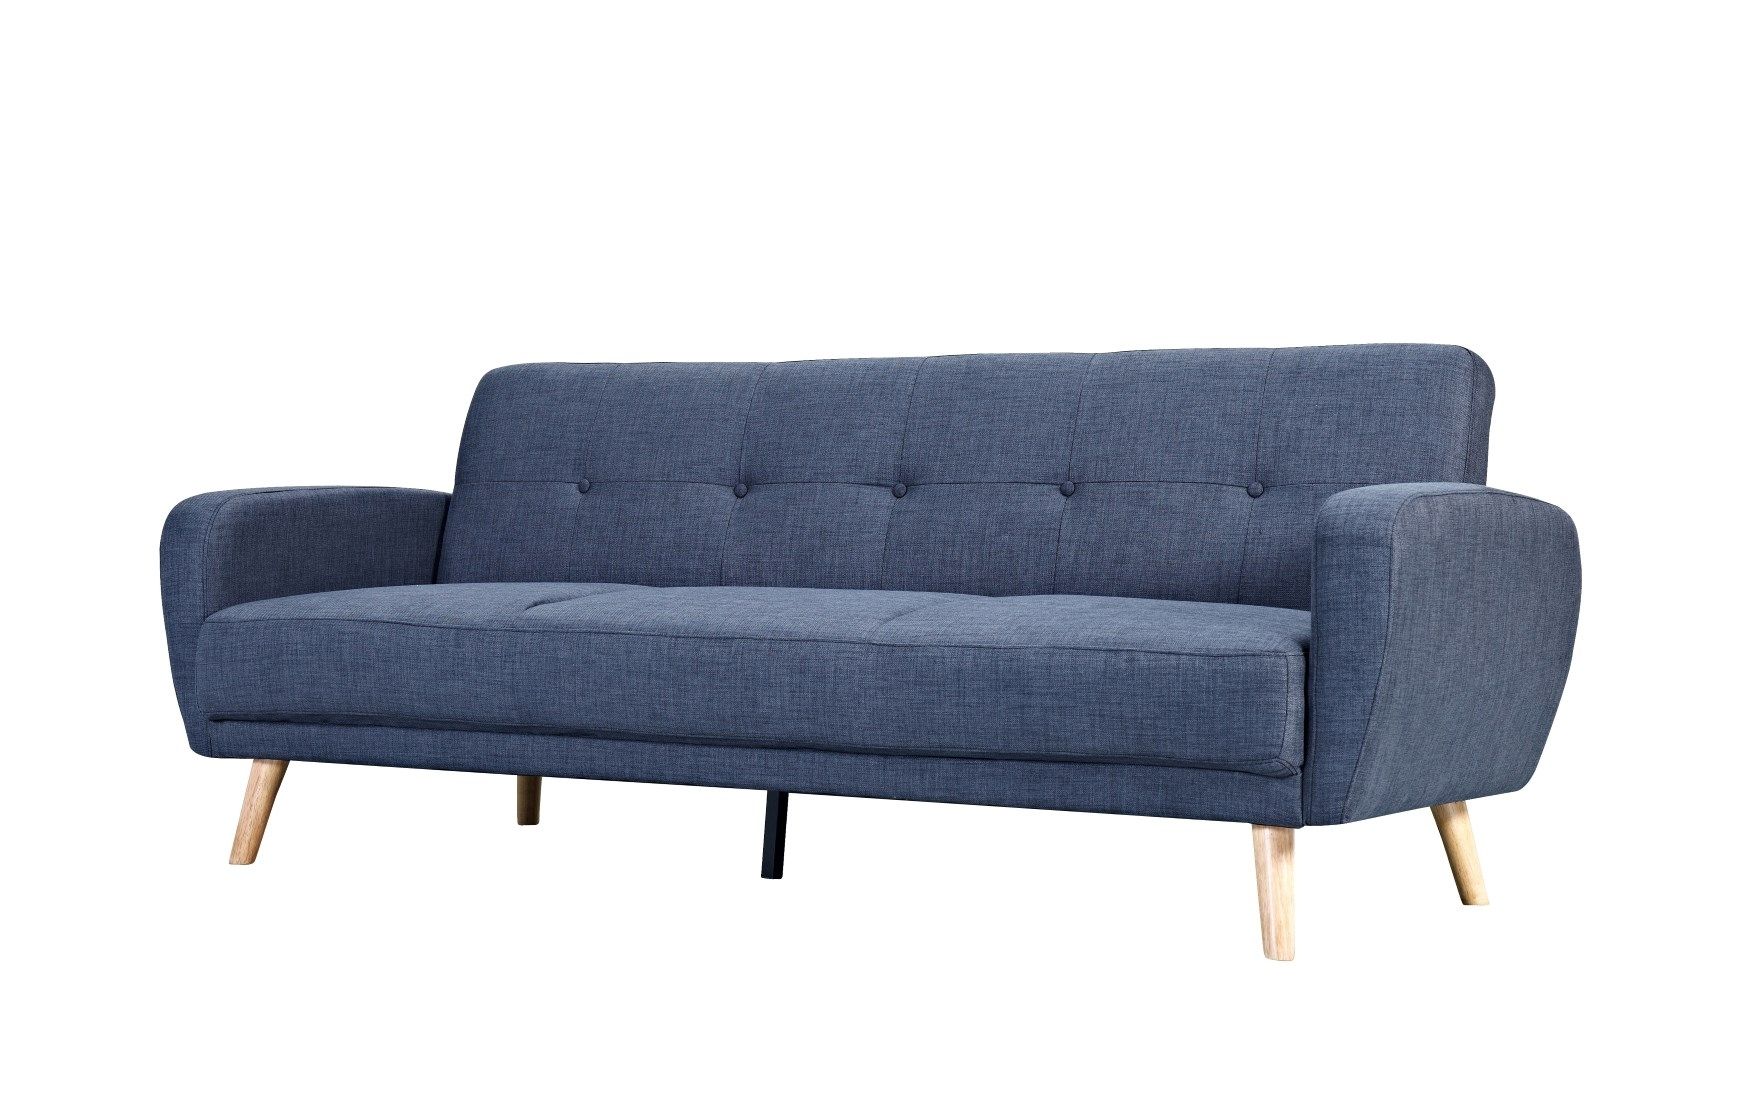 Arv Furniture – Mississauga, Brampton, Toronto & Gta – Ongoing Sale With Kijiji Mississauga Sectional Sofas (View 5 of 10)